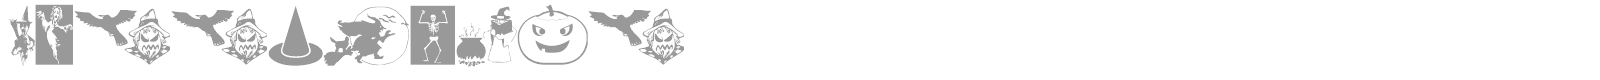 Font Hallsymbol